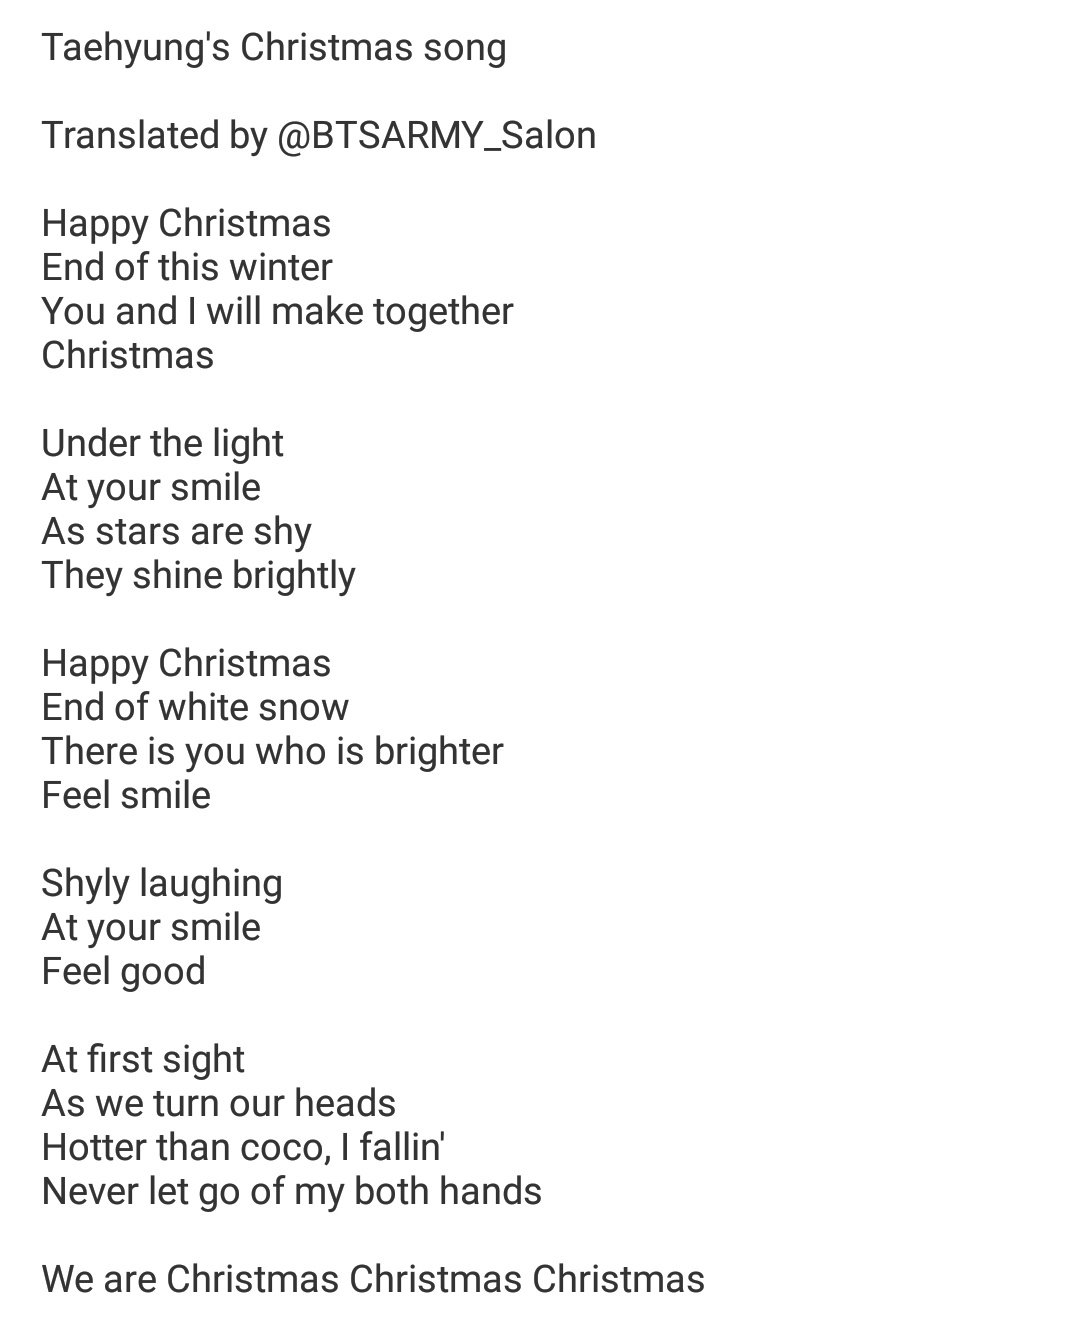 Vibe песня текст. Хэппи Кристмас песня текст. This Christmas песня текст.